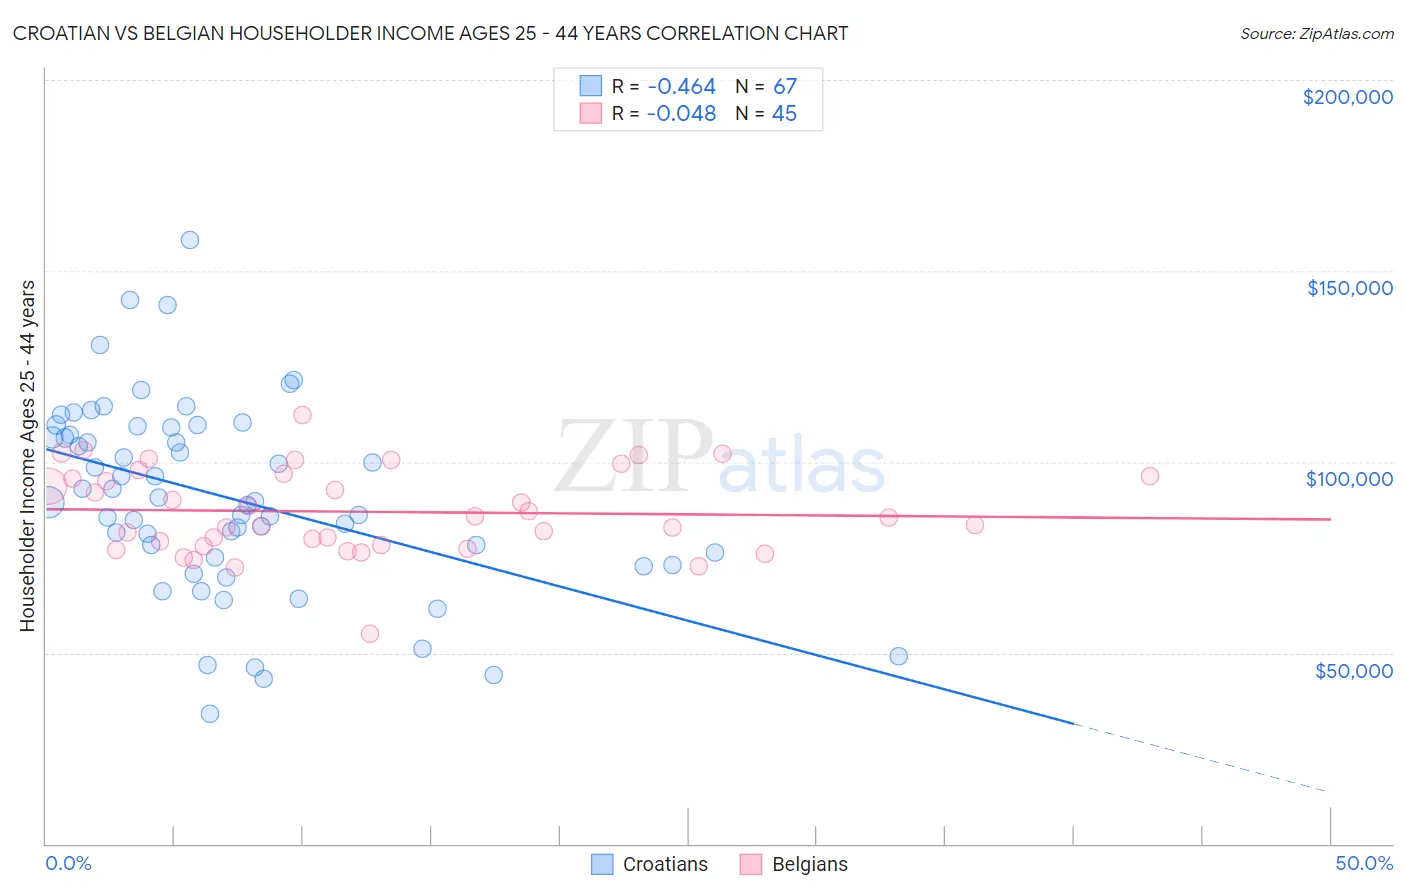 Croatian vs Belgian Householder Income Ages 25 - 44 years